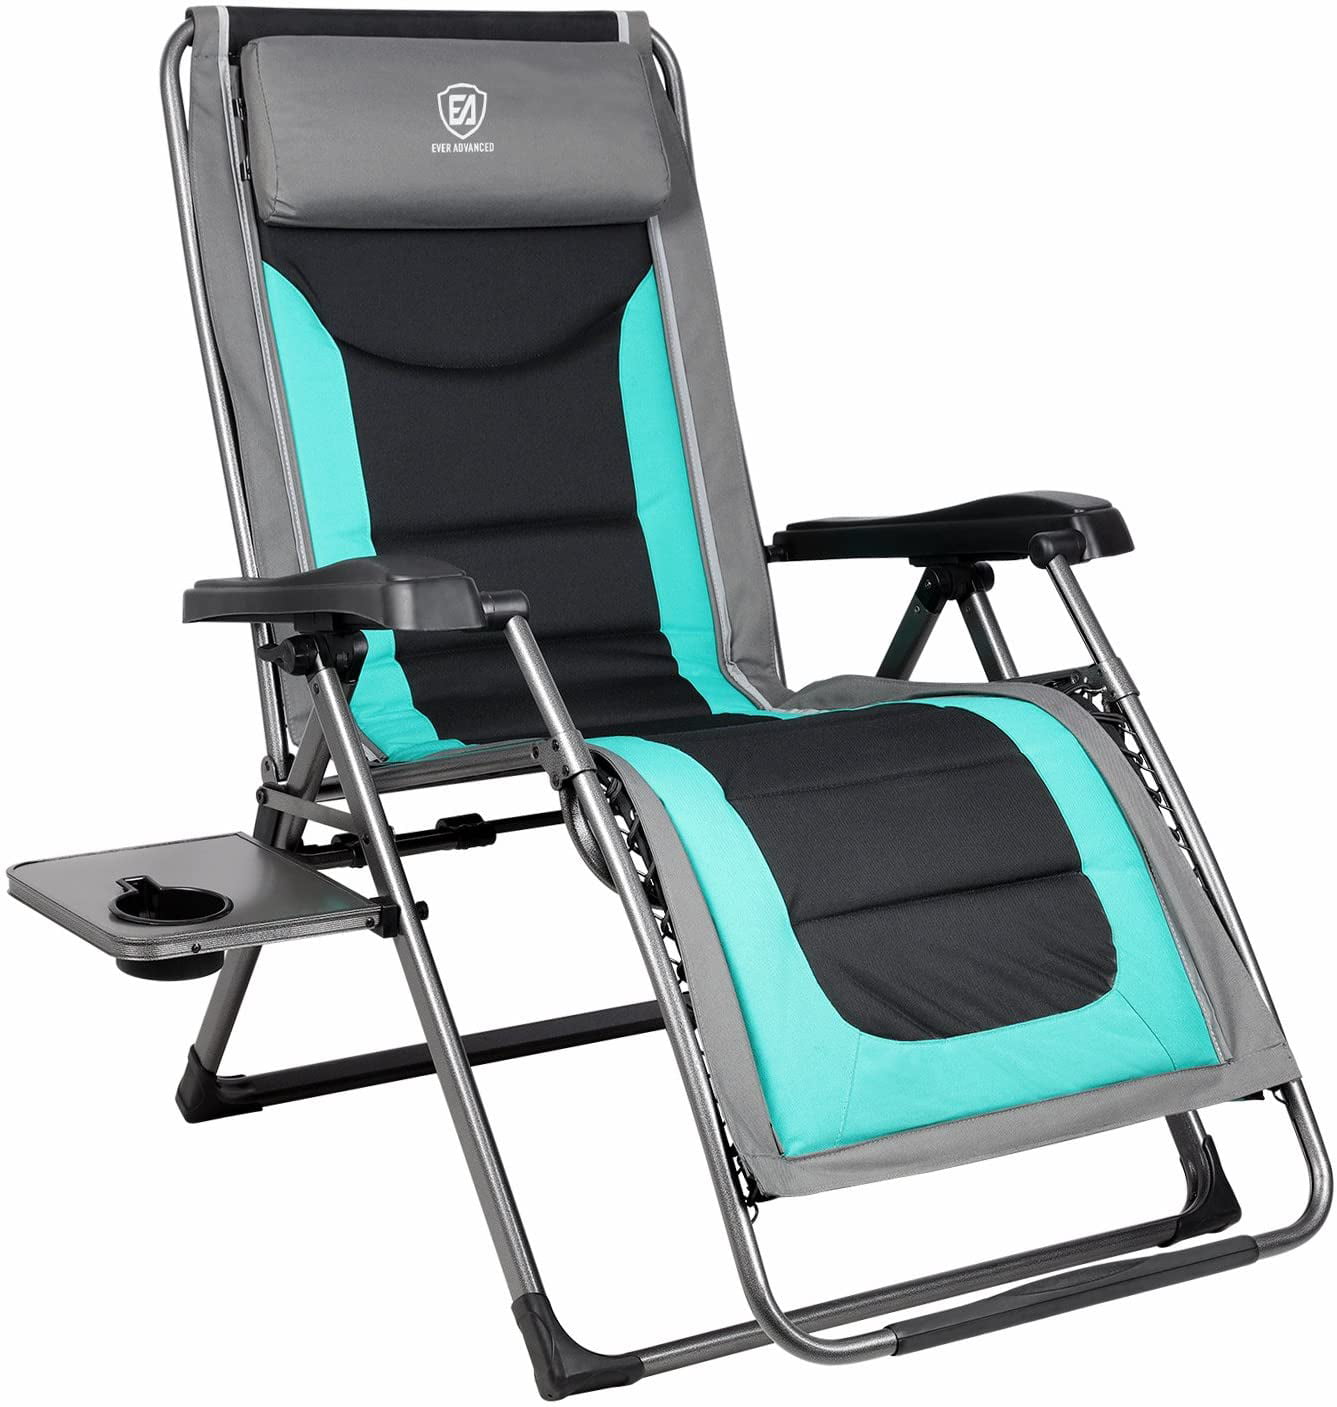 Ever Advanced Oversize Xl Zero Gravity Recliner Padded Patio Lounger Chair With Adjustable Headrest Support 350lbs Green Walmart Com Walmart Com